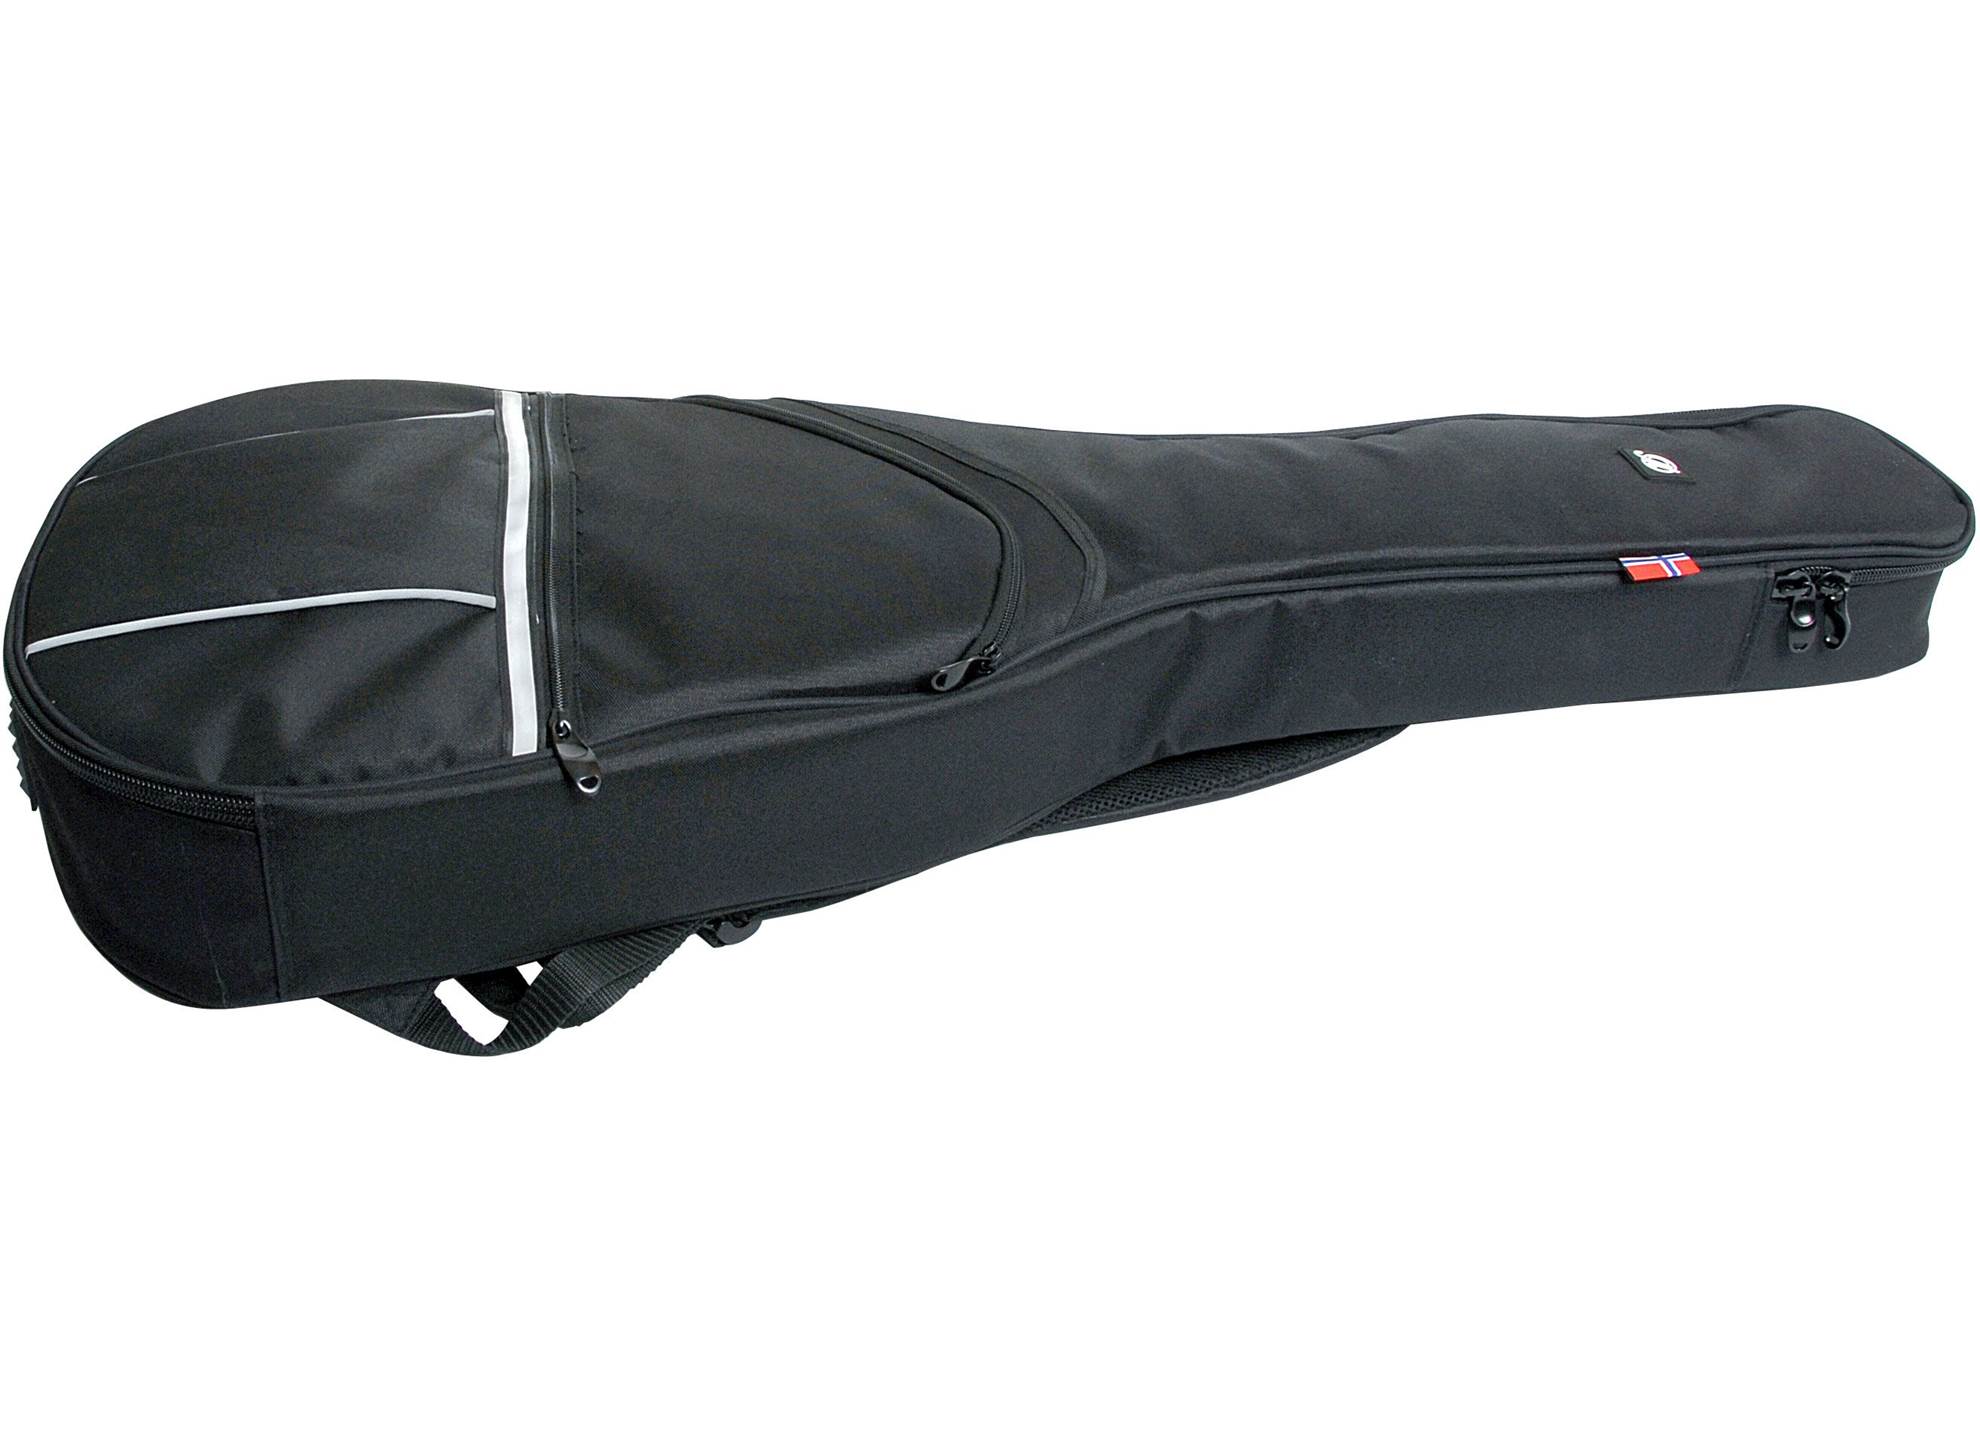 RW02 EG Electric Guitar Bag